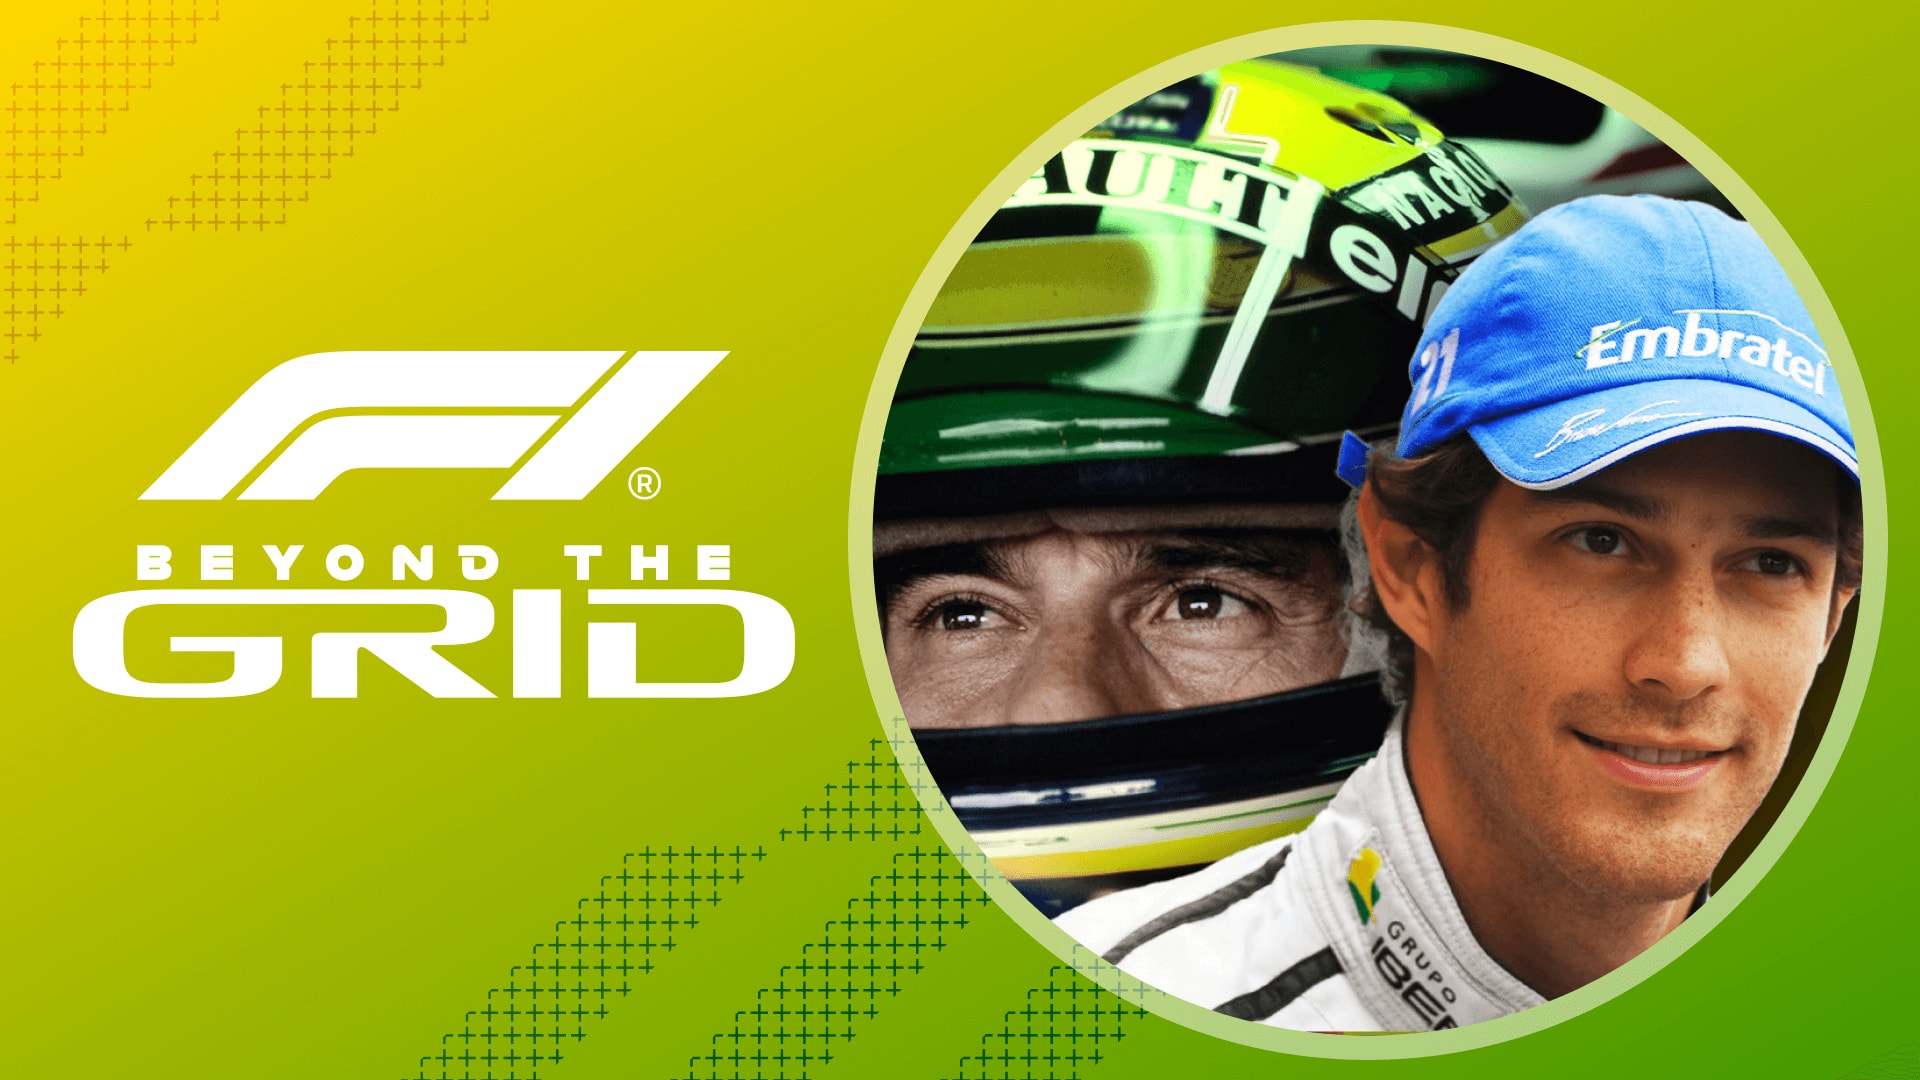 BEYOND THE GRID: Bruno Senna remembers his uncle and hero Ayrton Senna